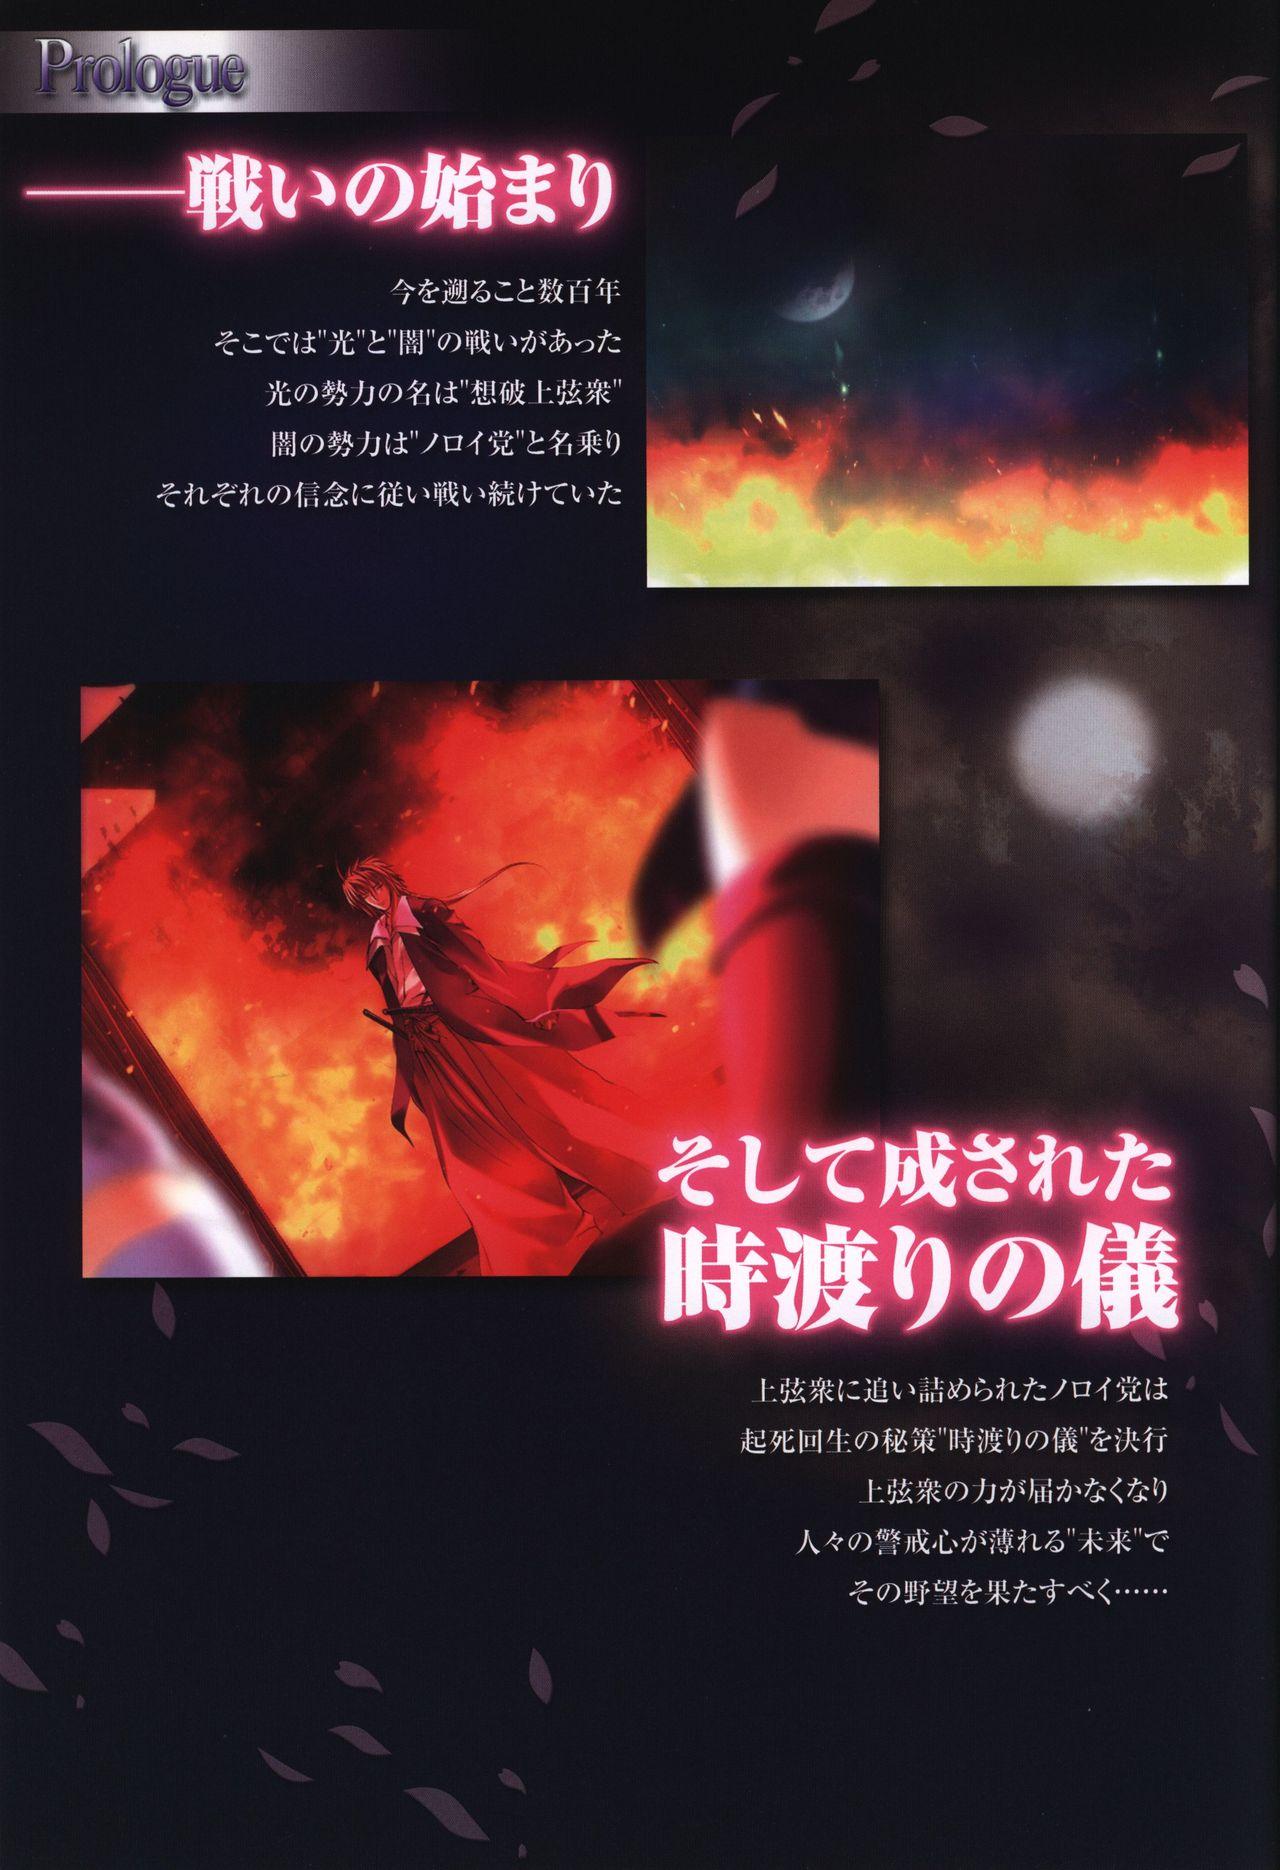 Choukou Sennin Haruka visual fanbook 3